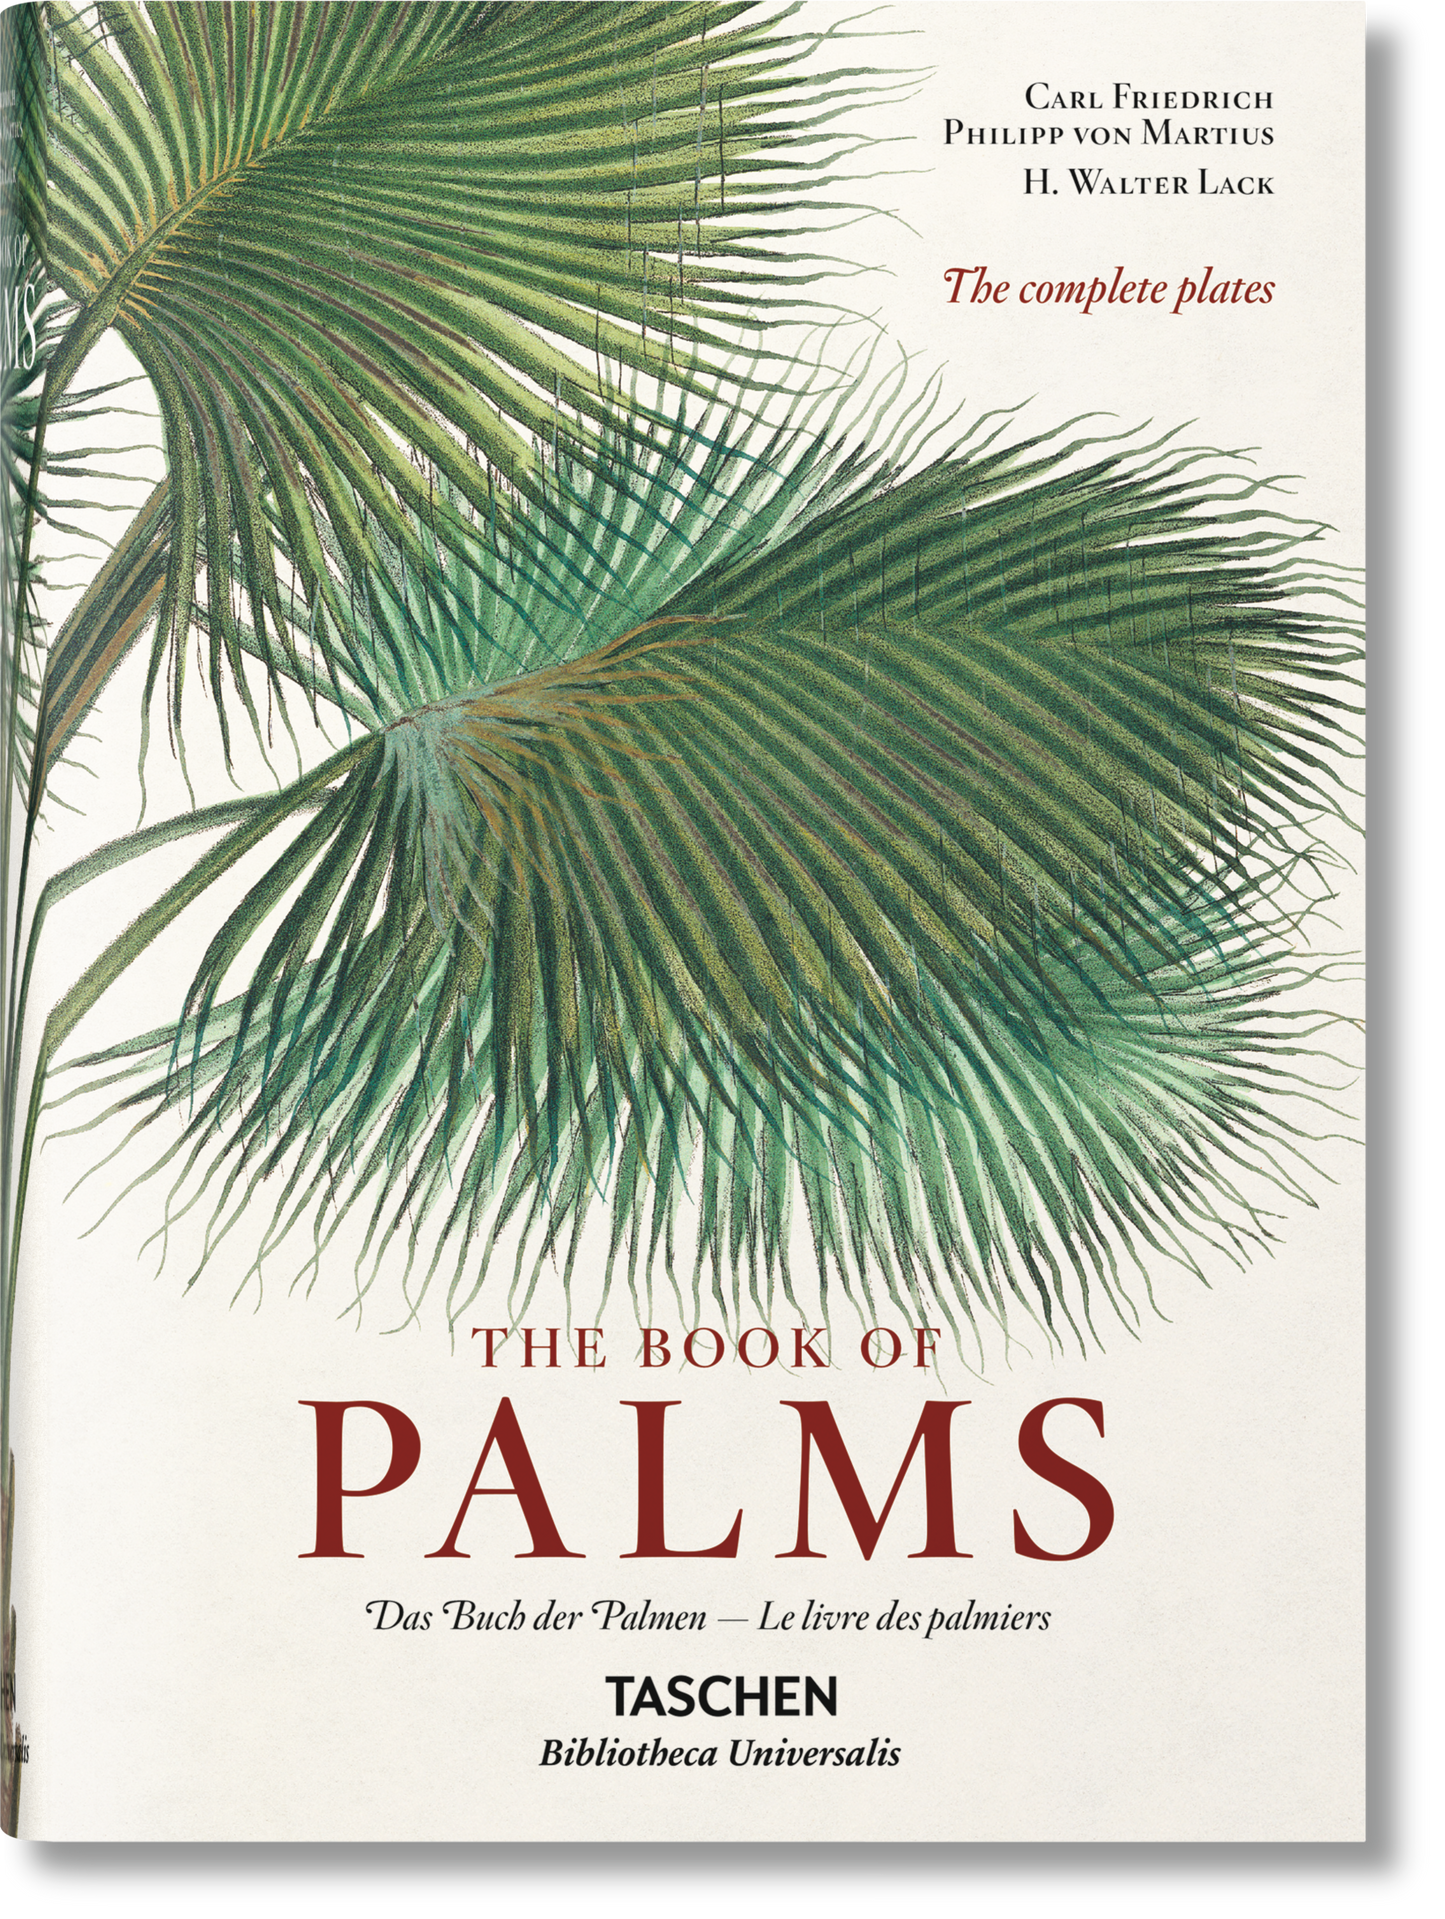 Les palmiers - Von Martius - Taschen